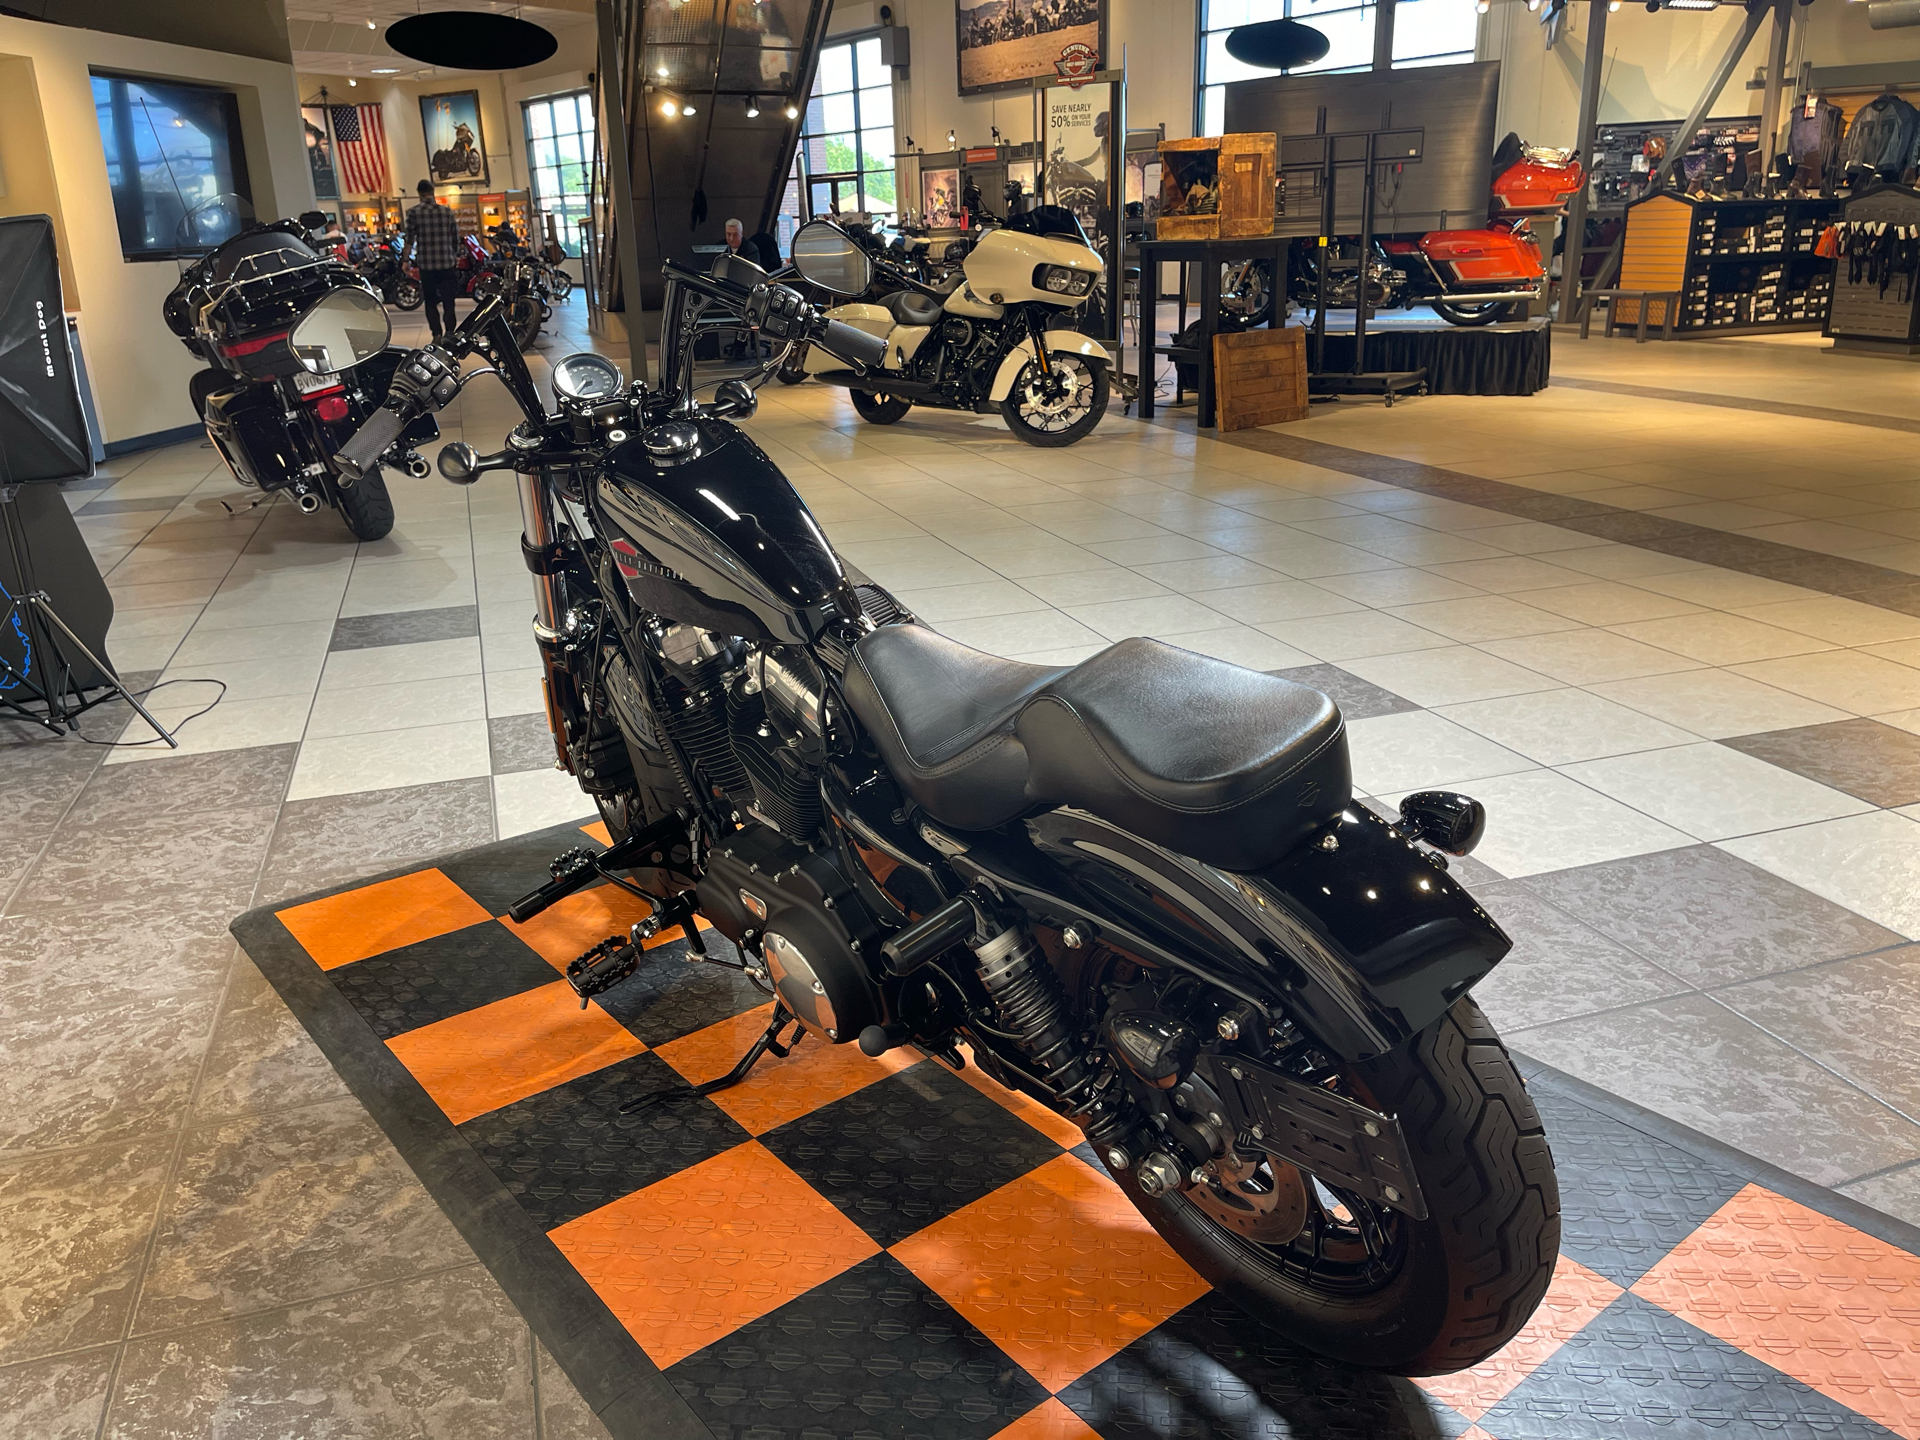 2020 Harley-Davidson Forty-Eight® in Baldwin Park, California - Photo 4